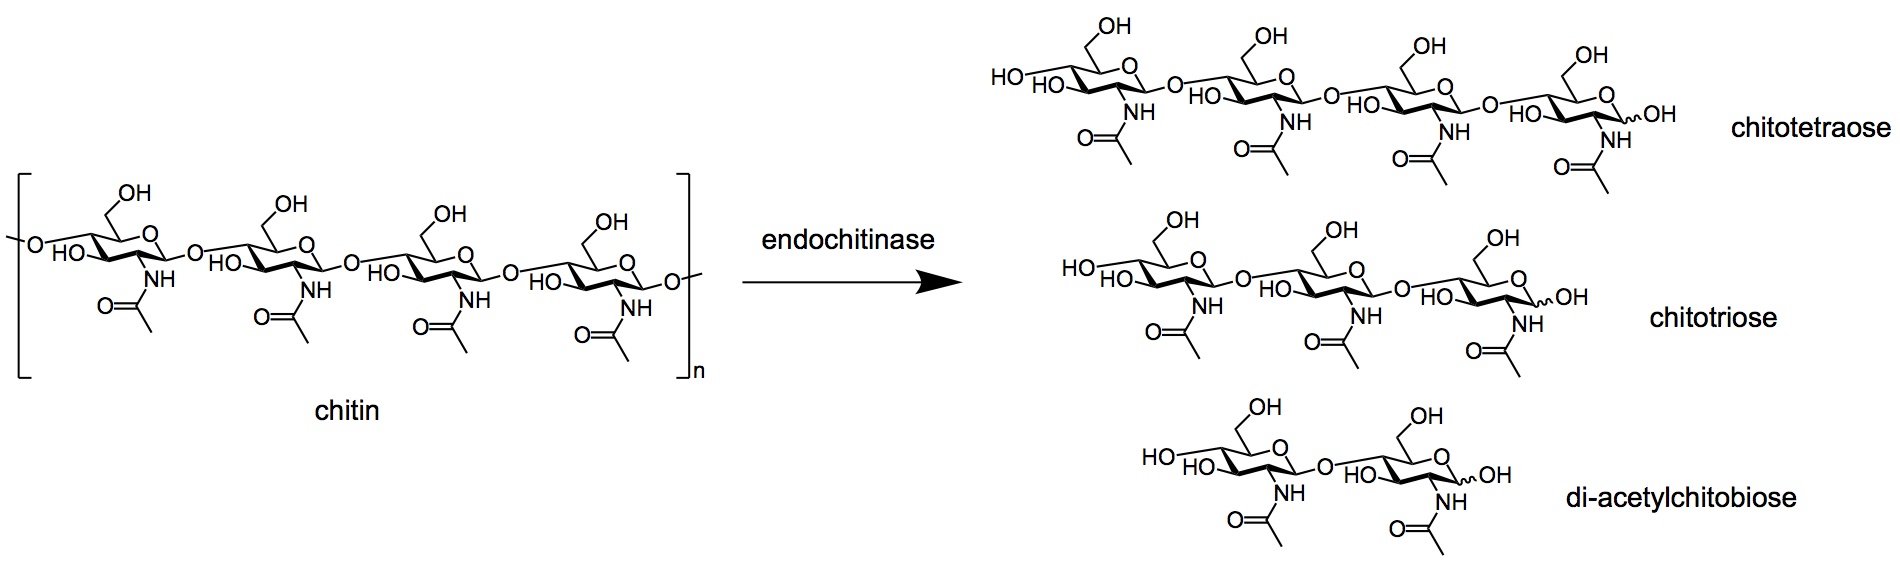 Endochitinases